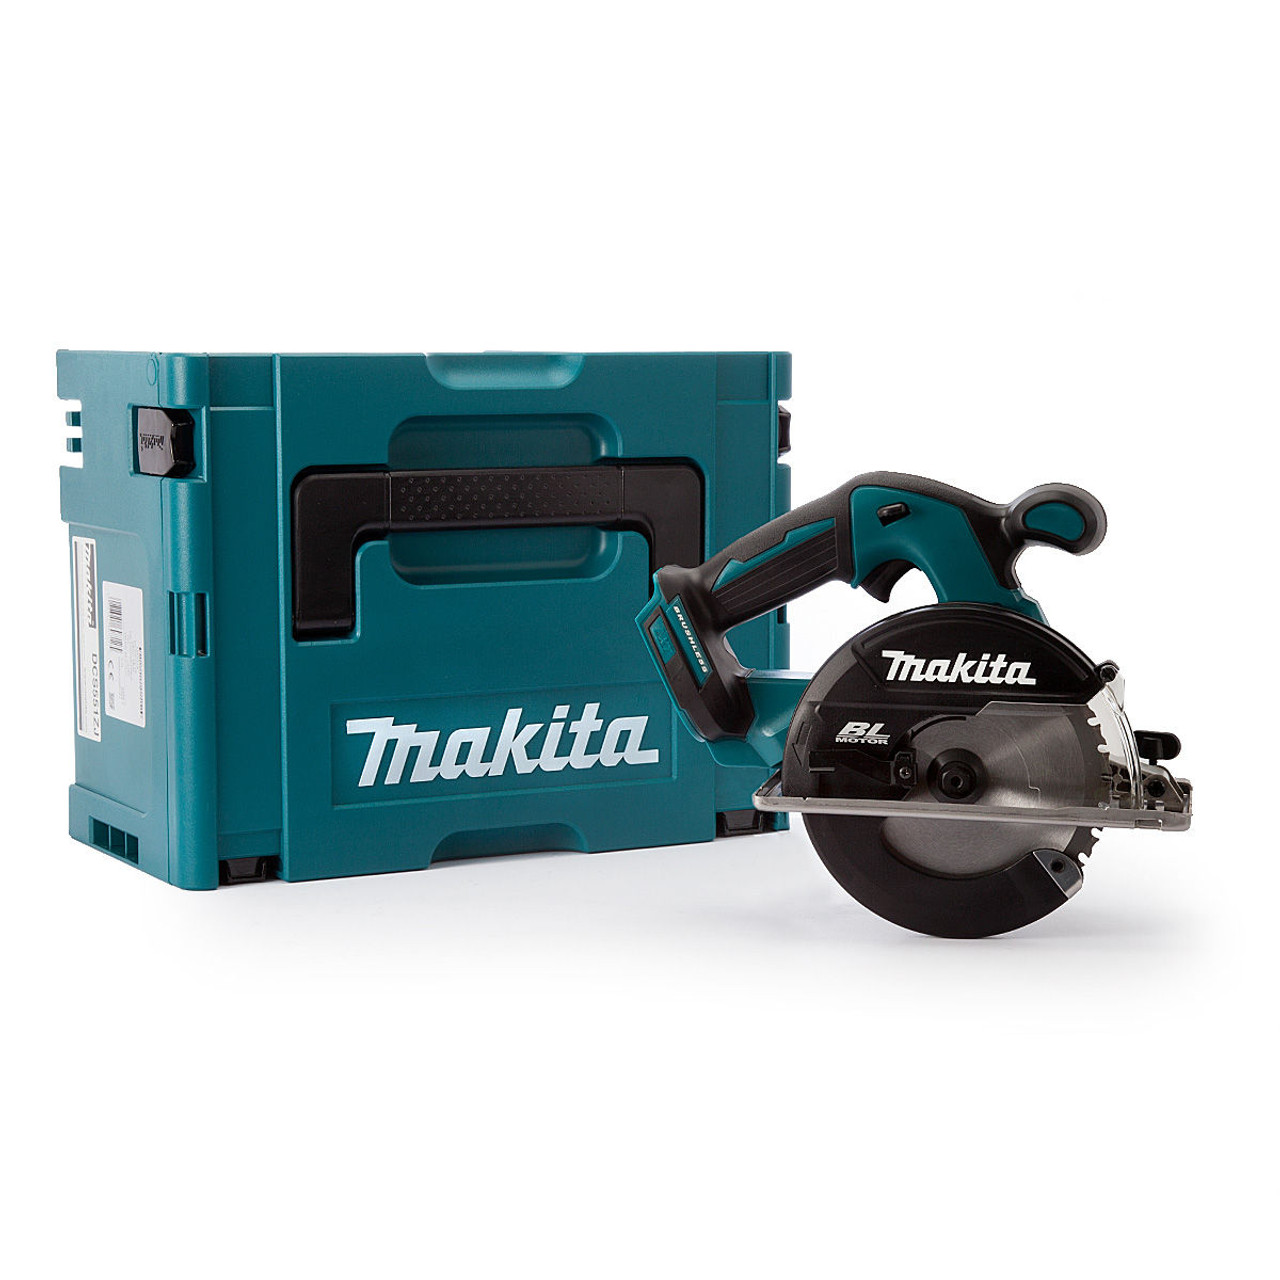 Makita 18V Brushless Saw 150mm | Toolstop